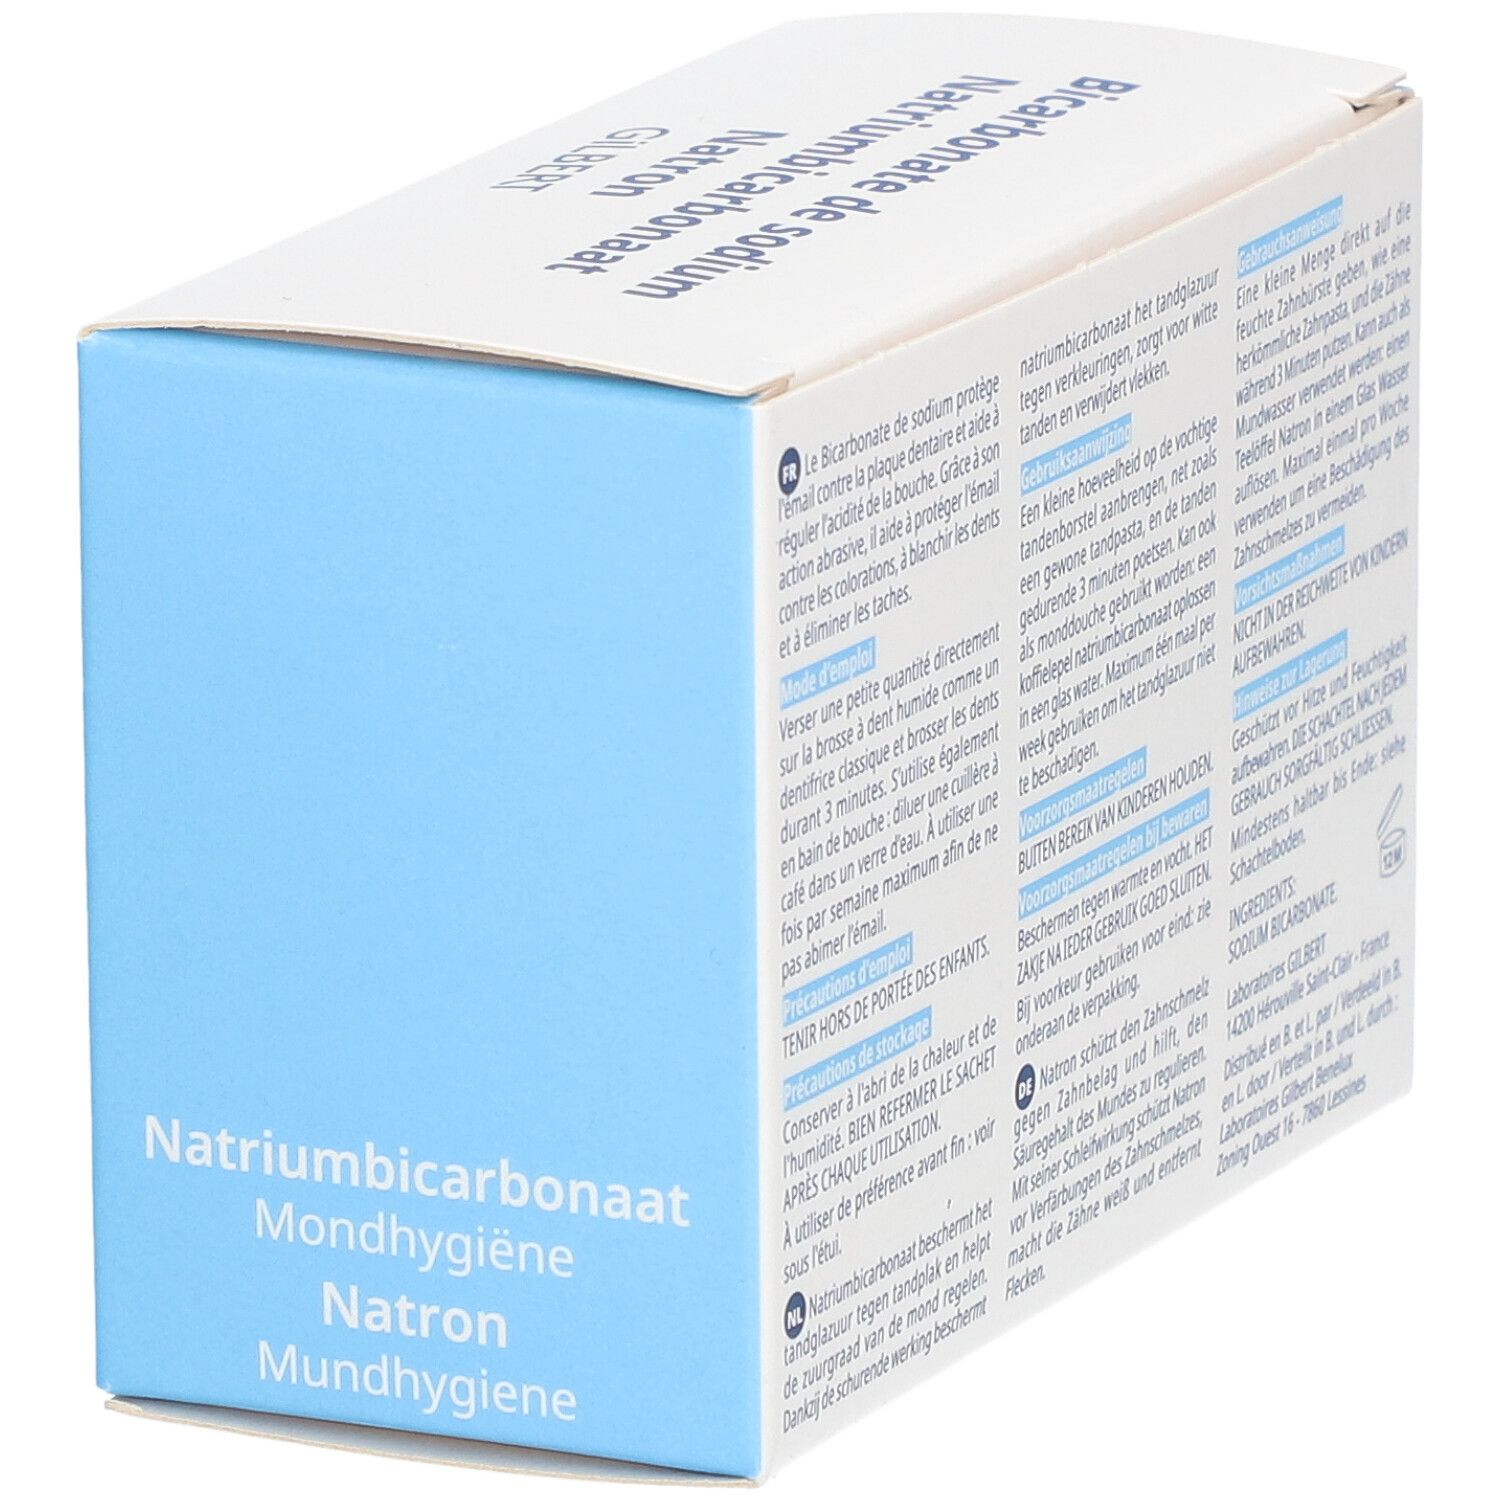 Gilbert Bicarbonate Sodium 250g - Blanchiment Dents, Anti-Taches - Pharma360